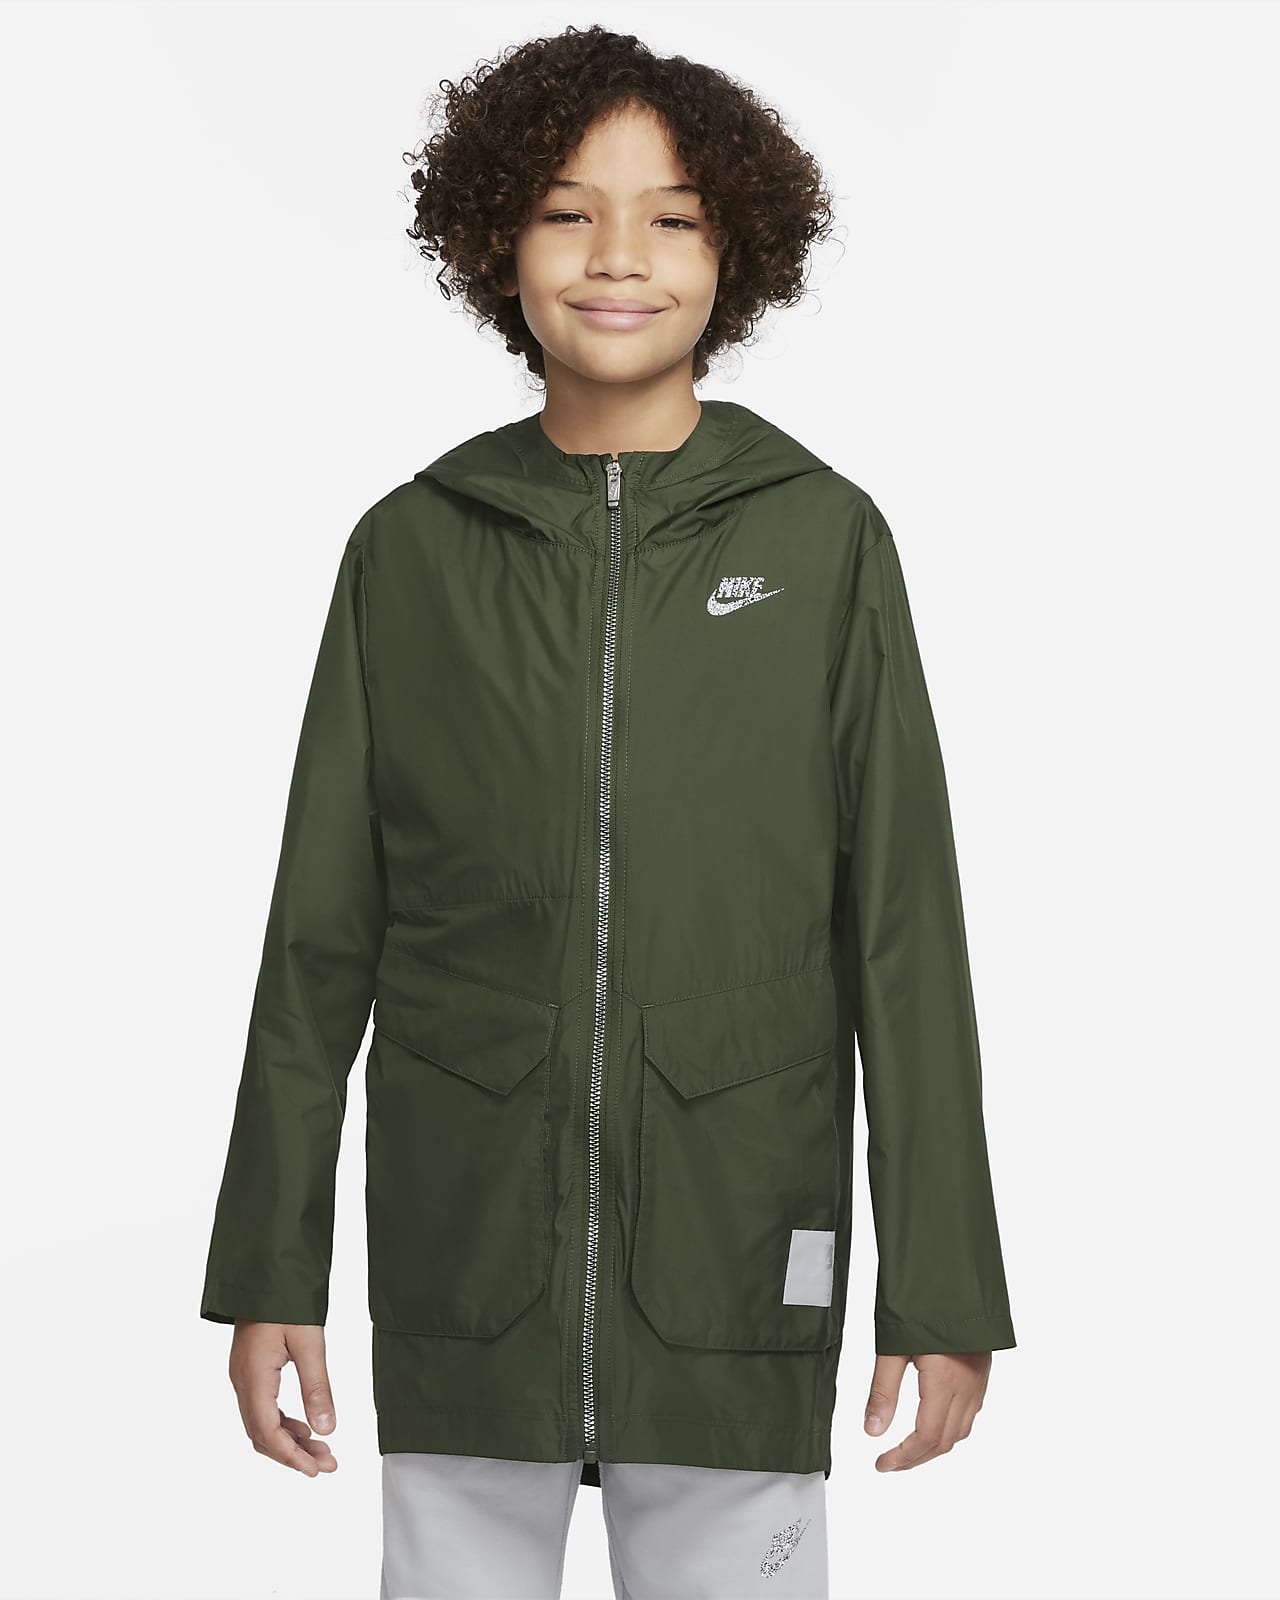 Nike Sportswear Kids Pack Utility Big Kids' (Boys') Jacket